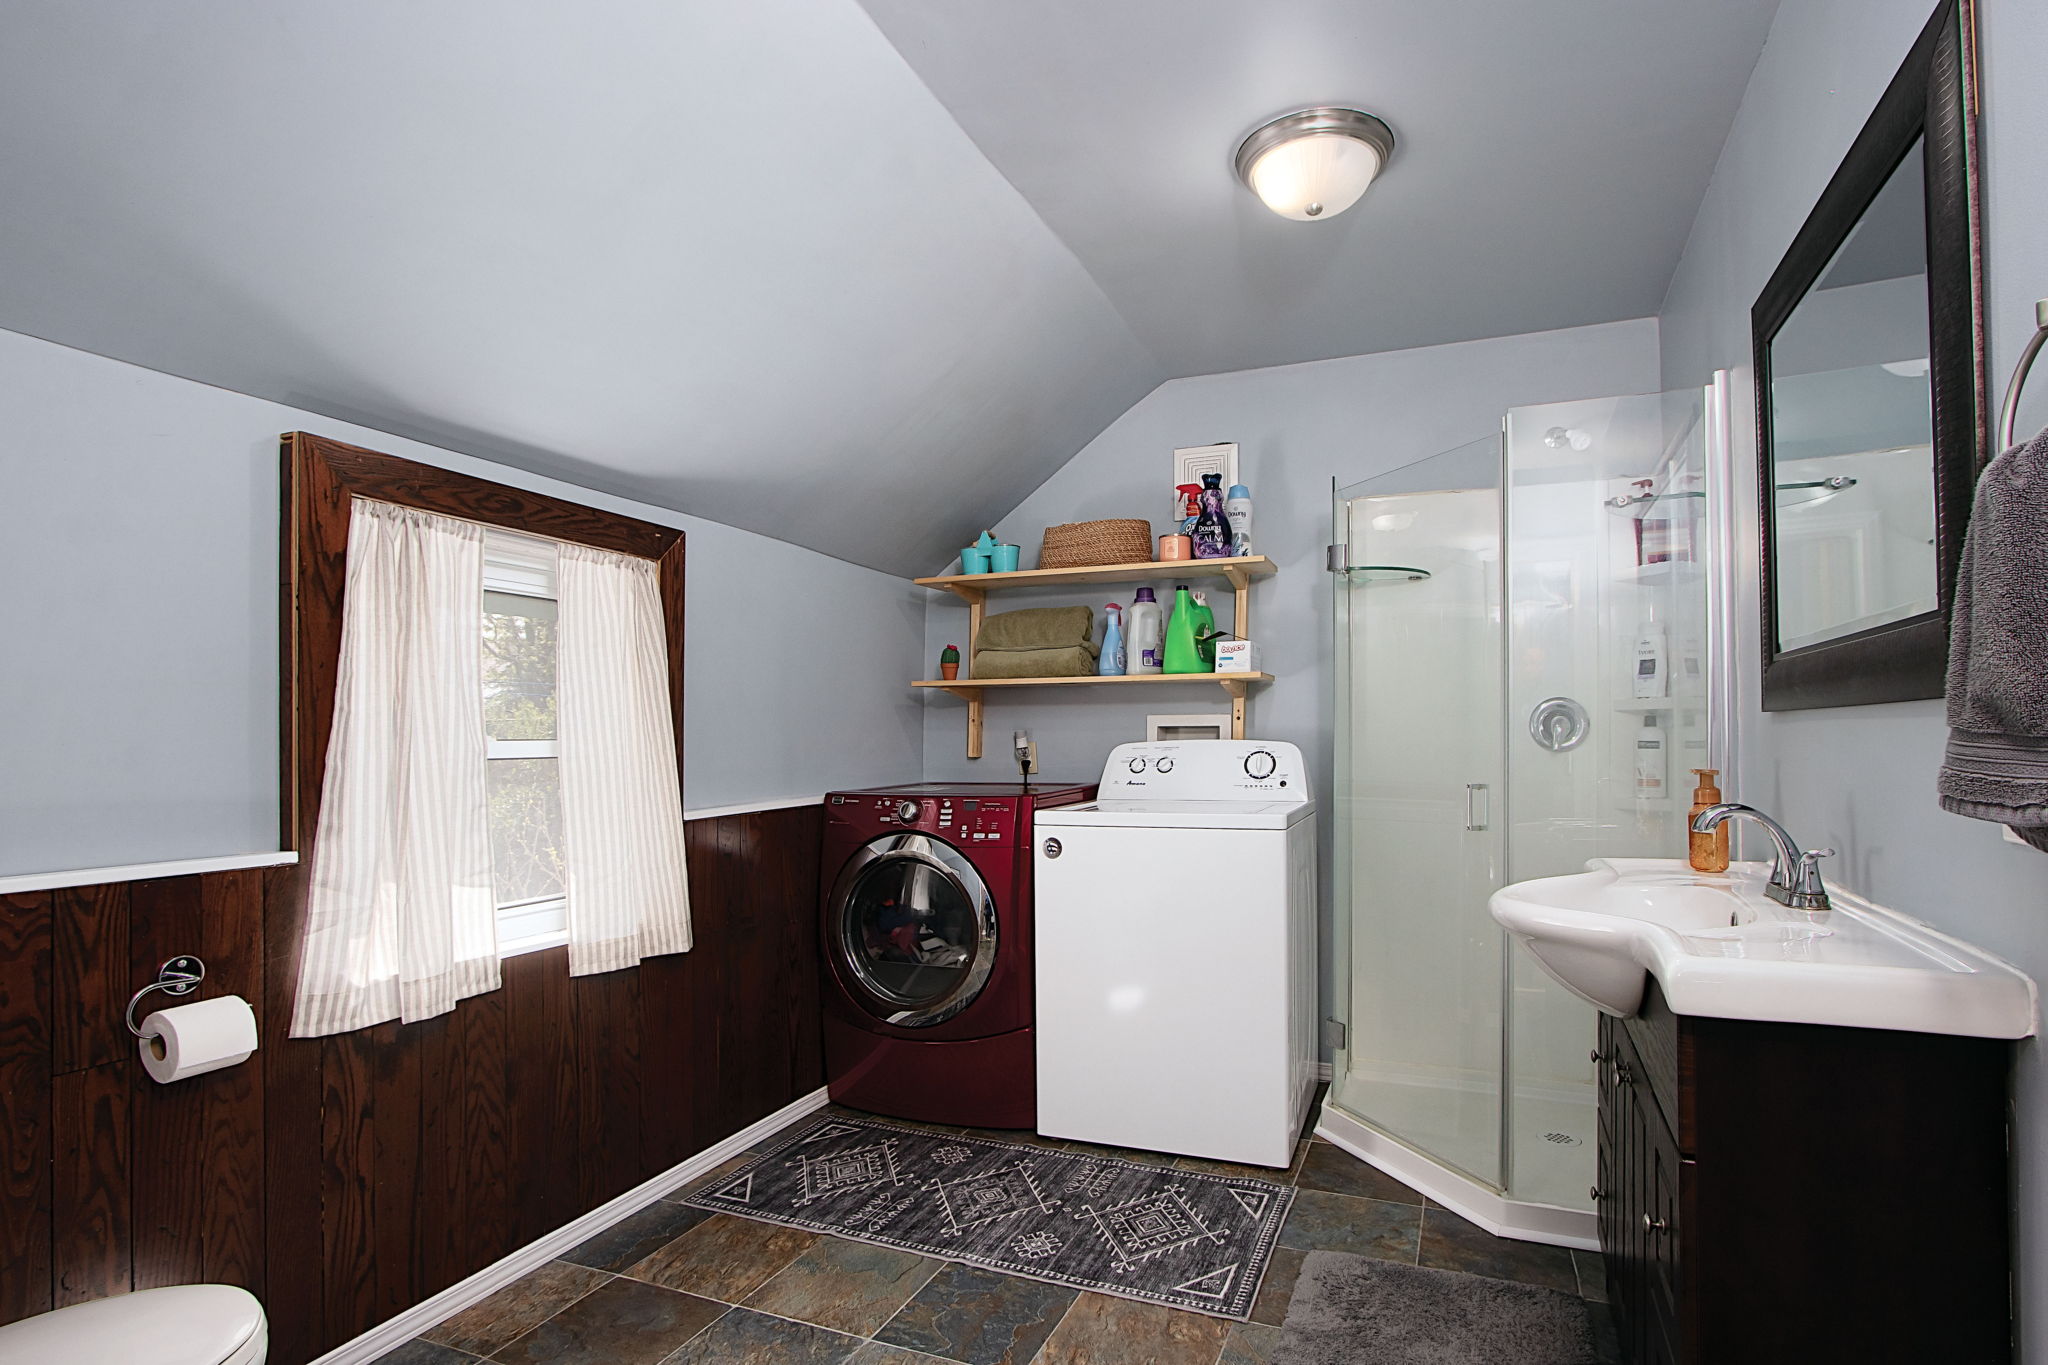 137 Bathroom - Laundry Room